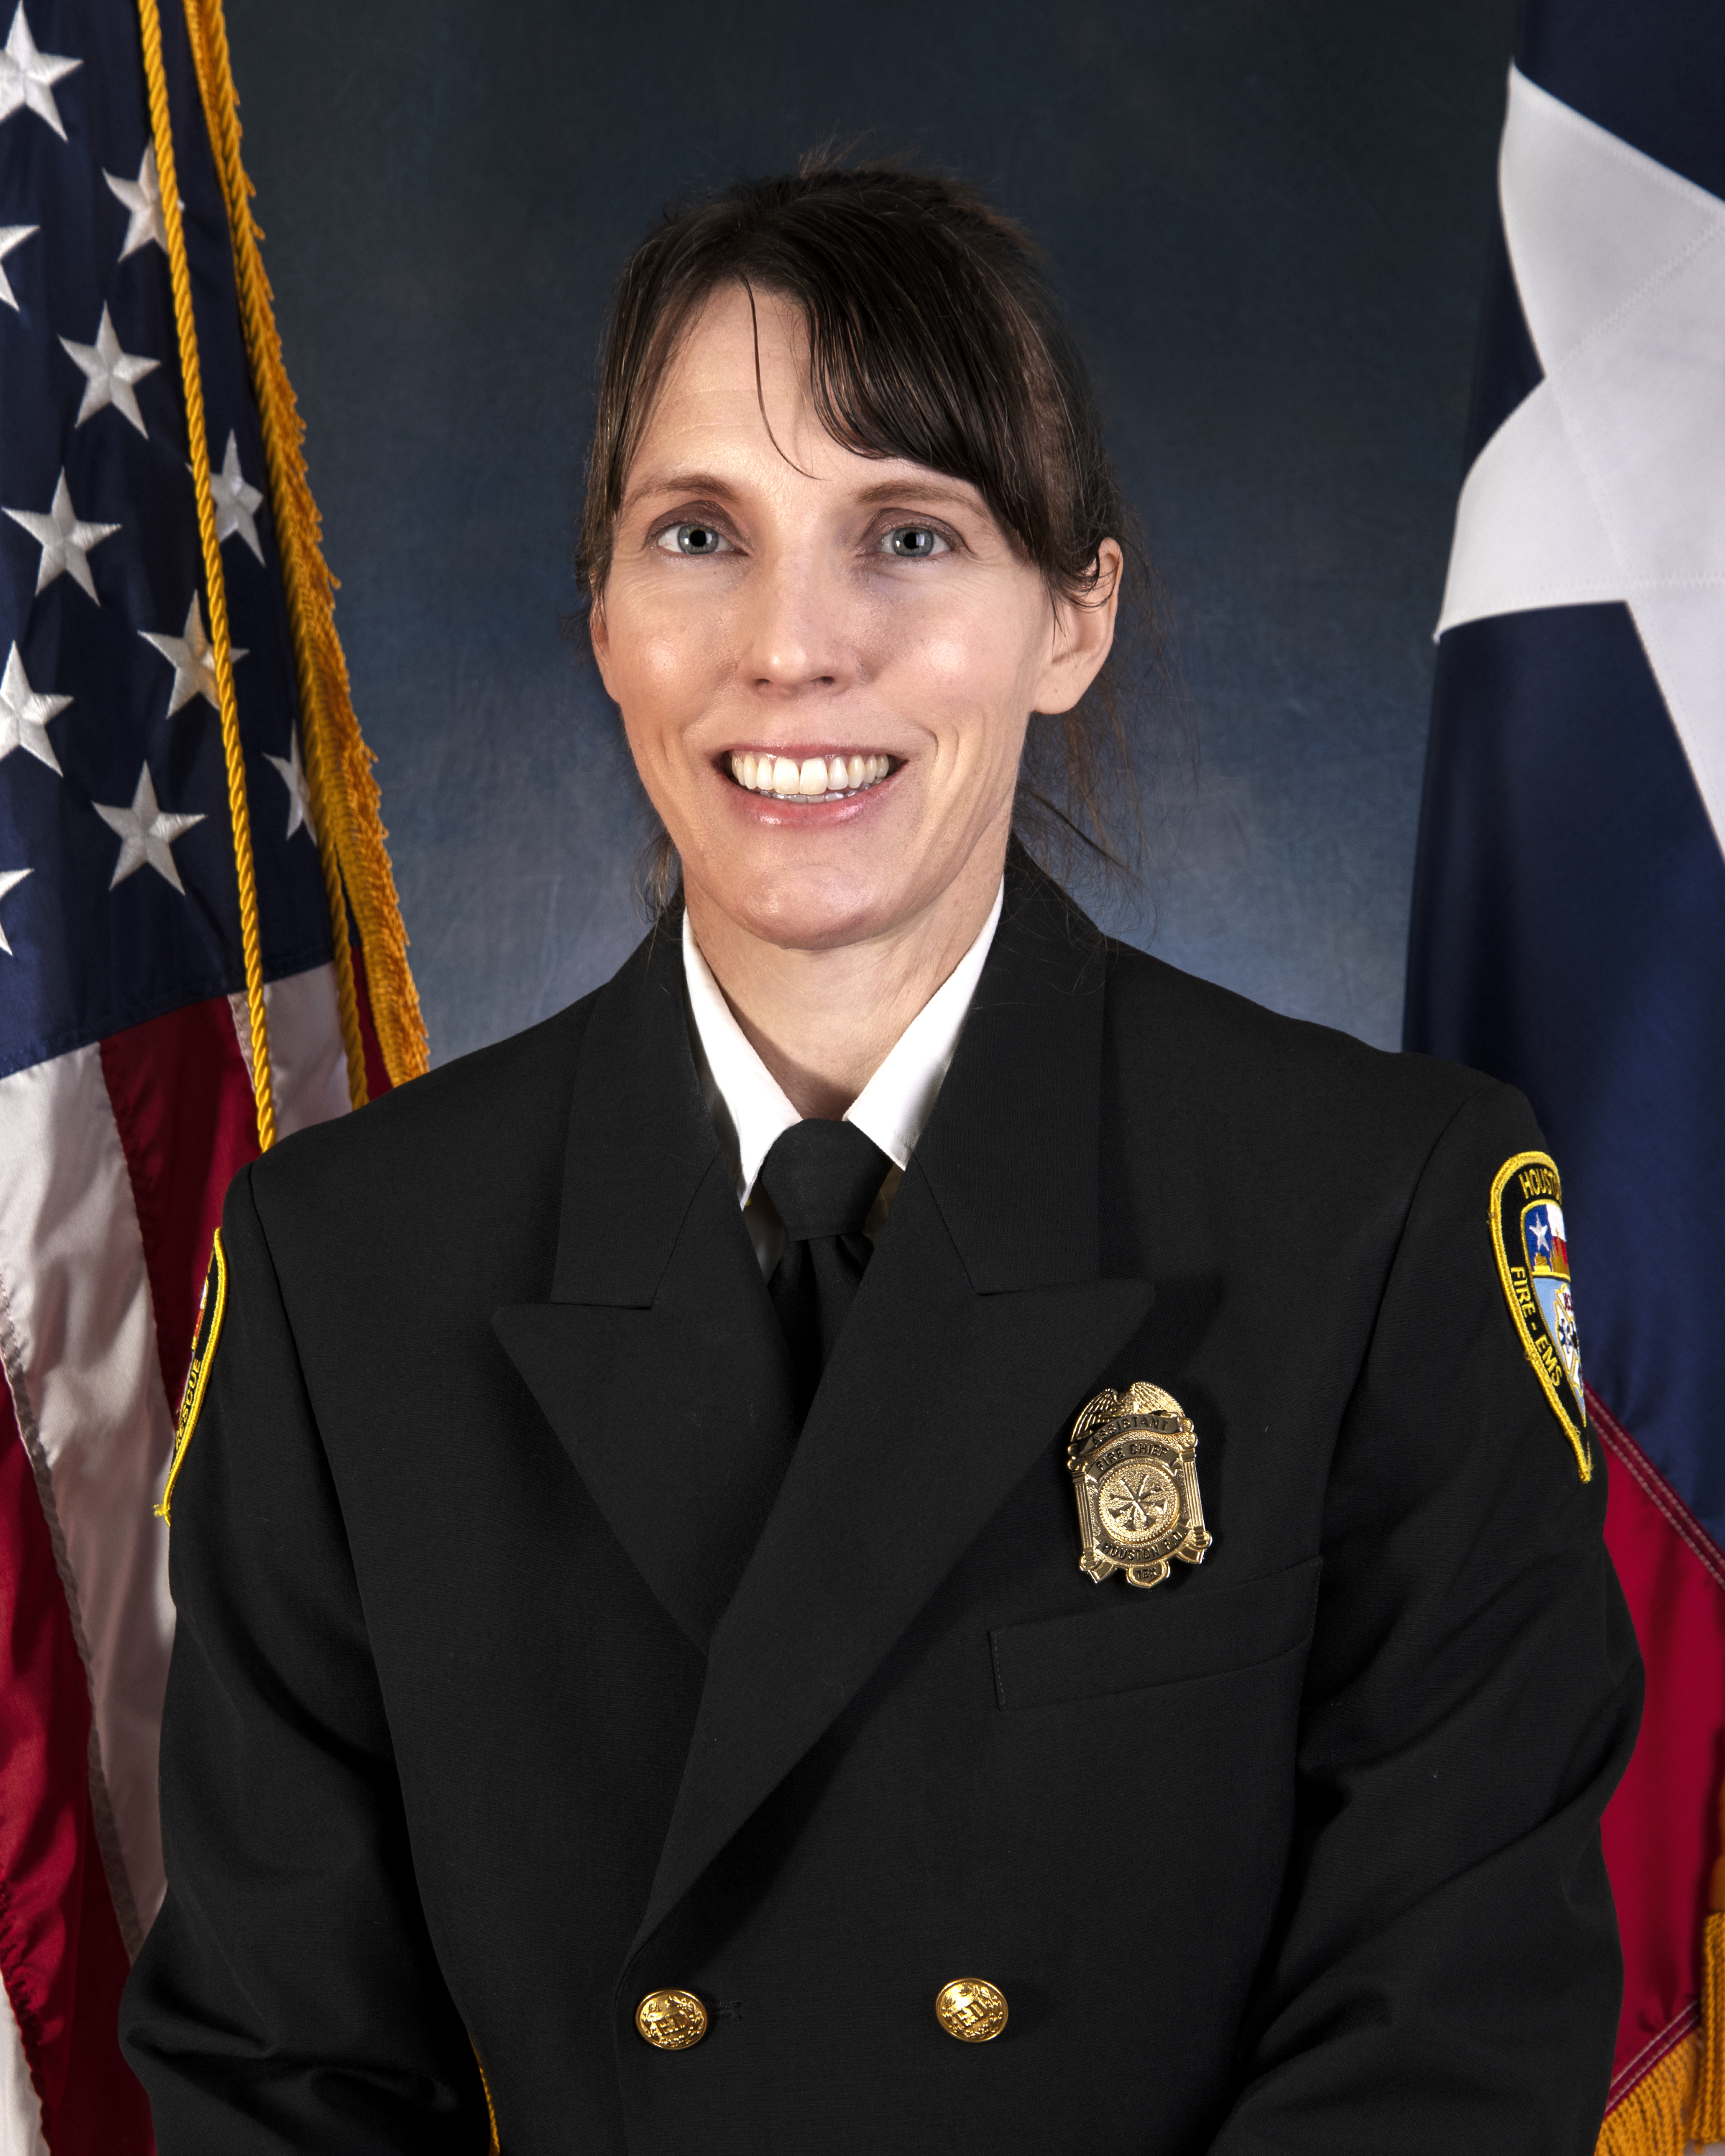 HFD Assistant Chief Michelle Bentley